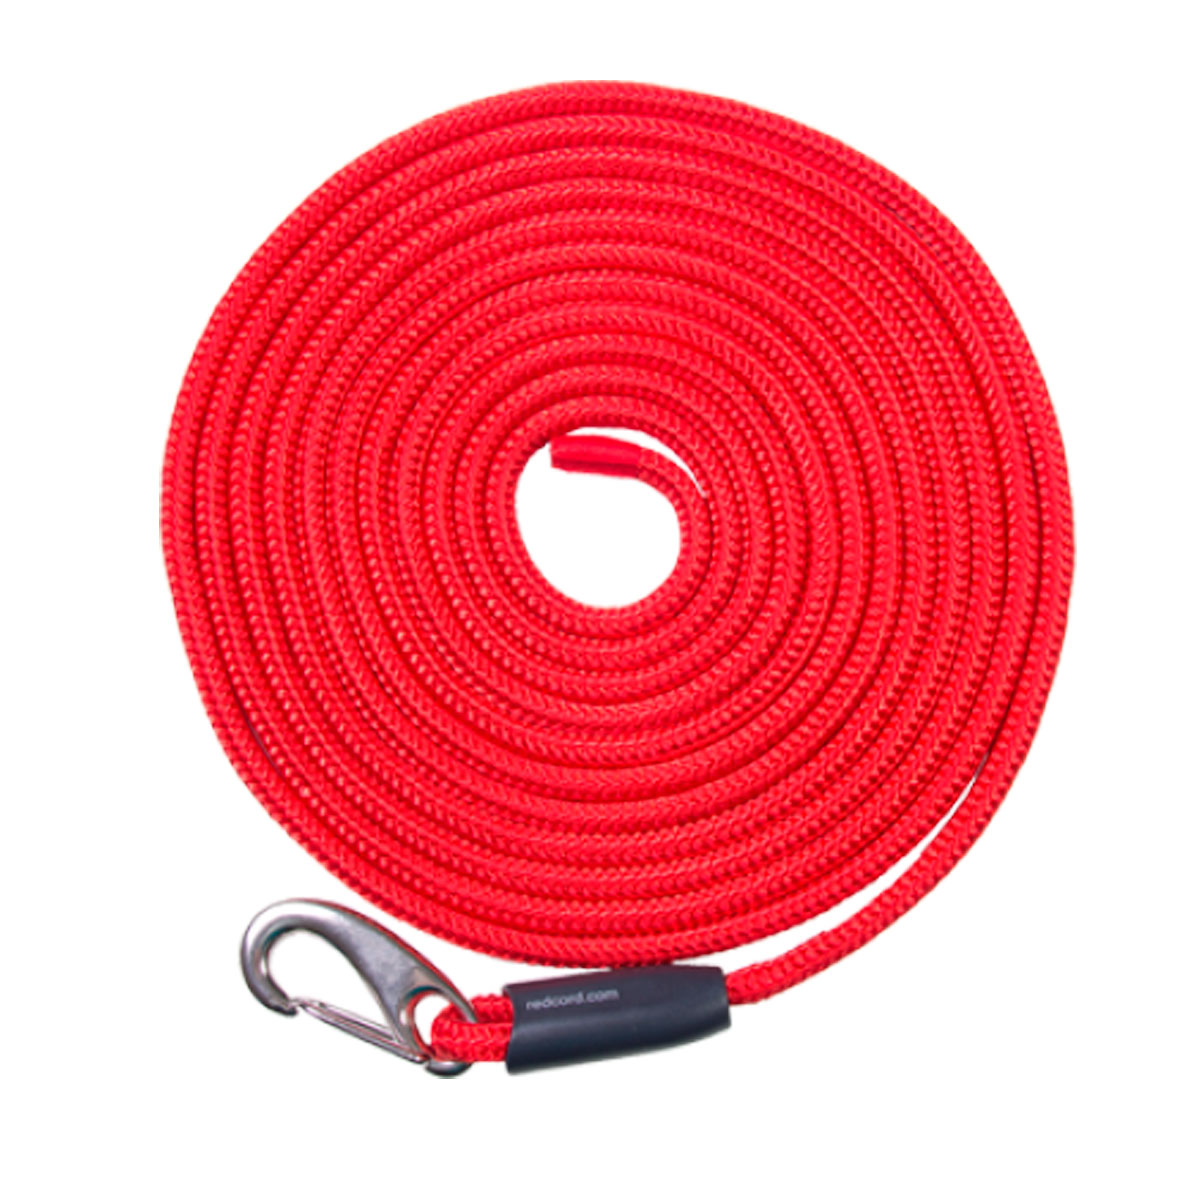 redcord cuerda roja 5m